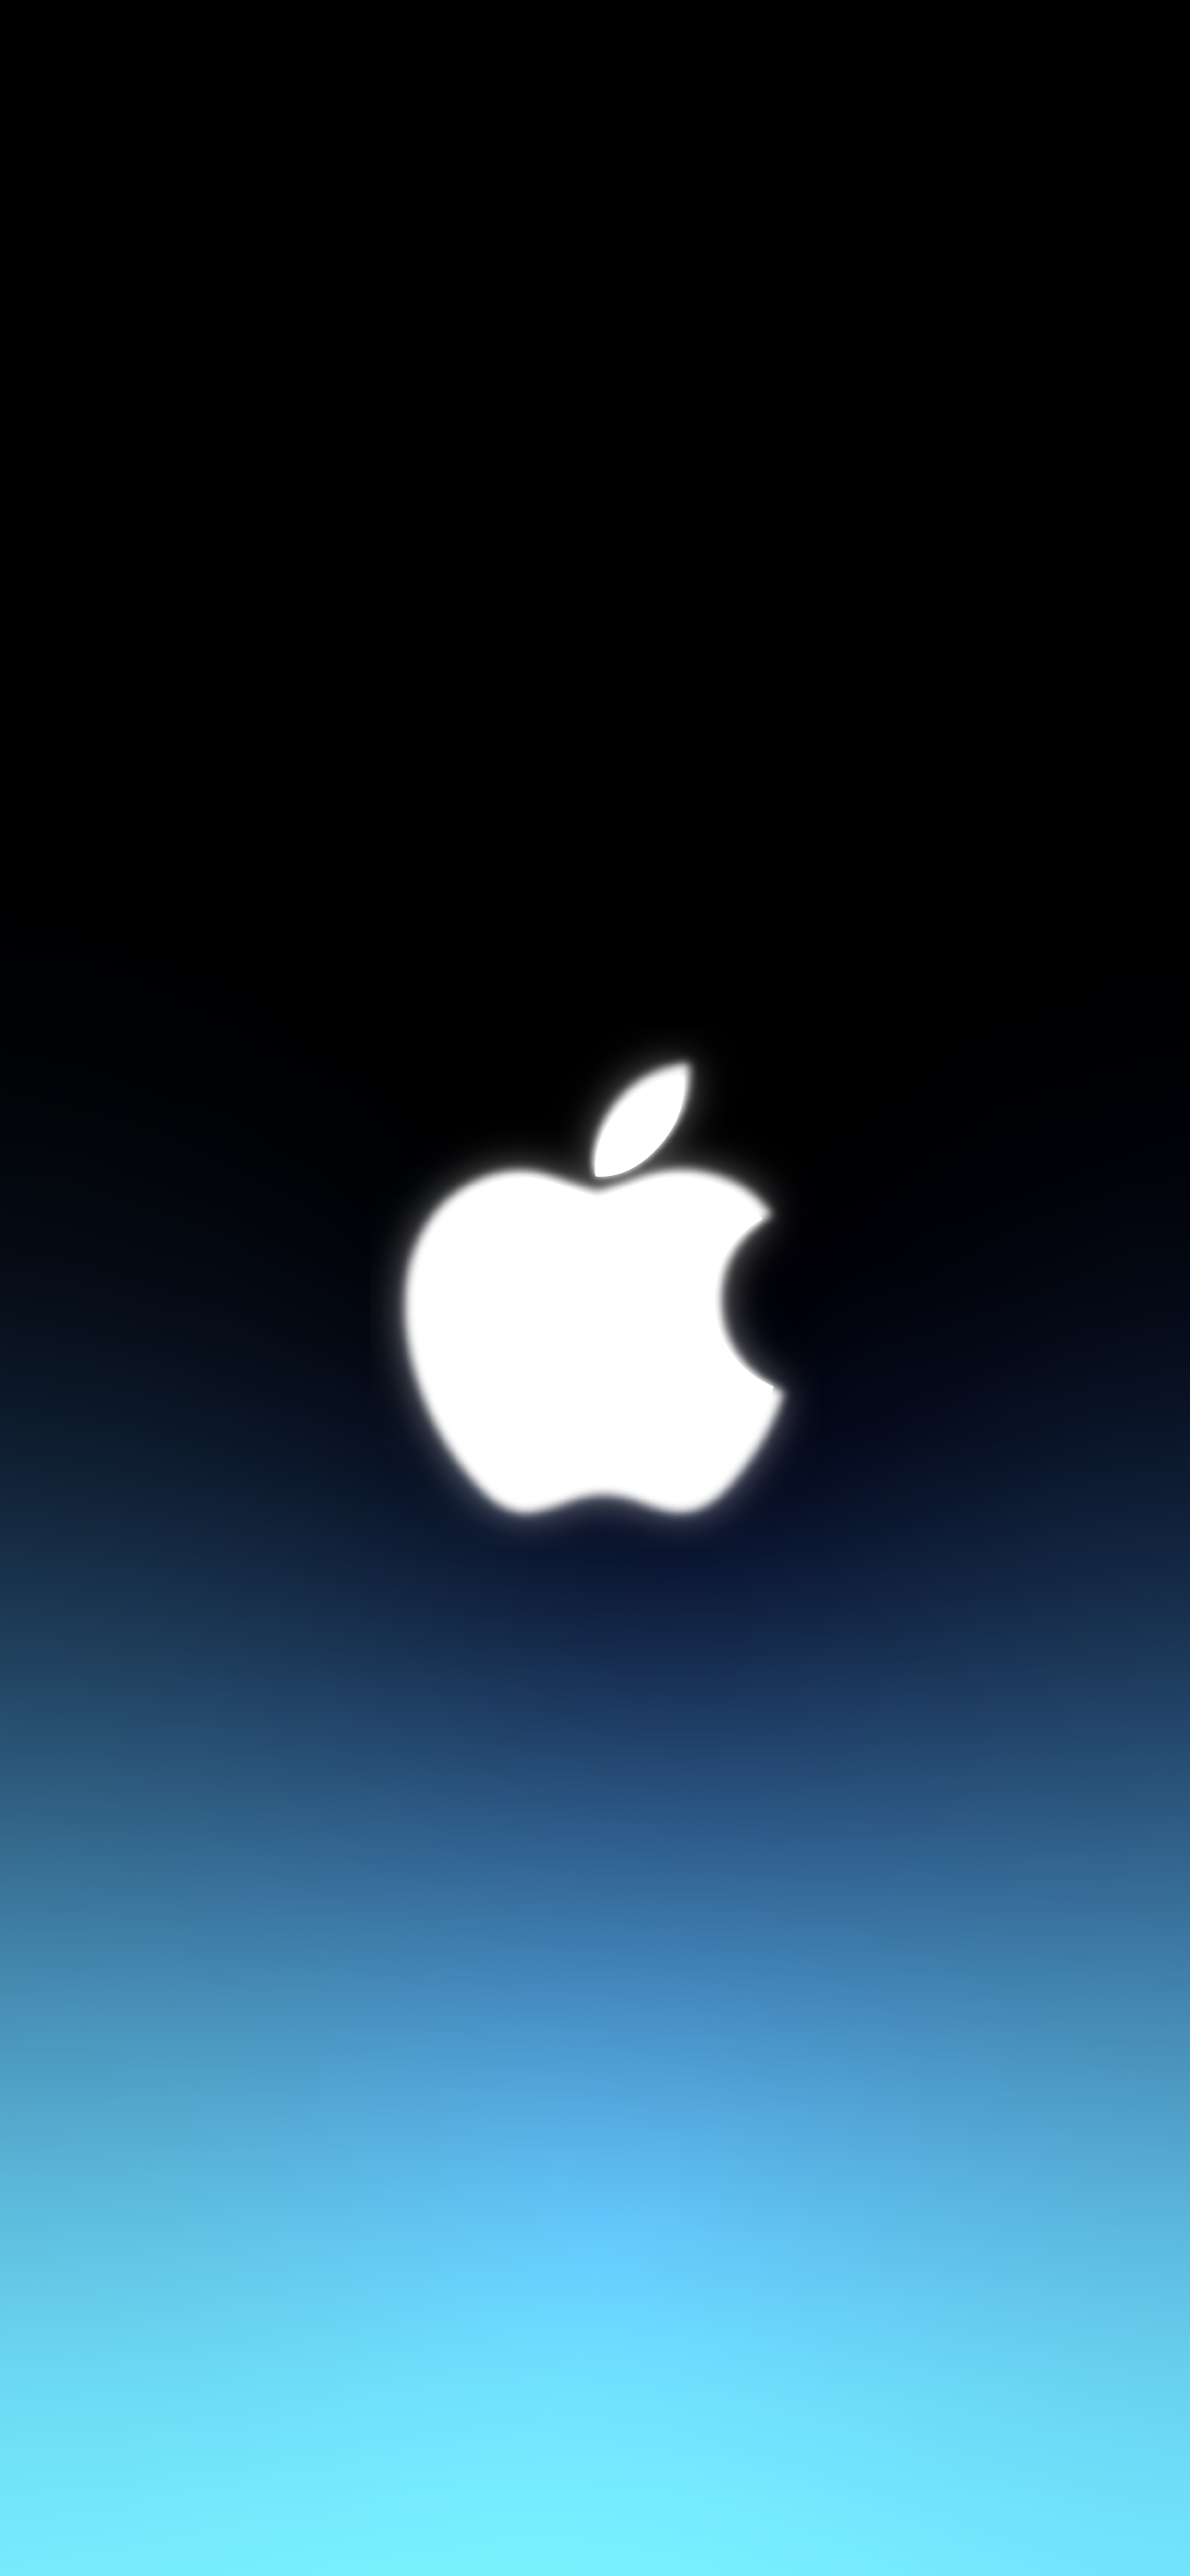 Apple logo iphone wallpapers